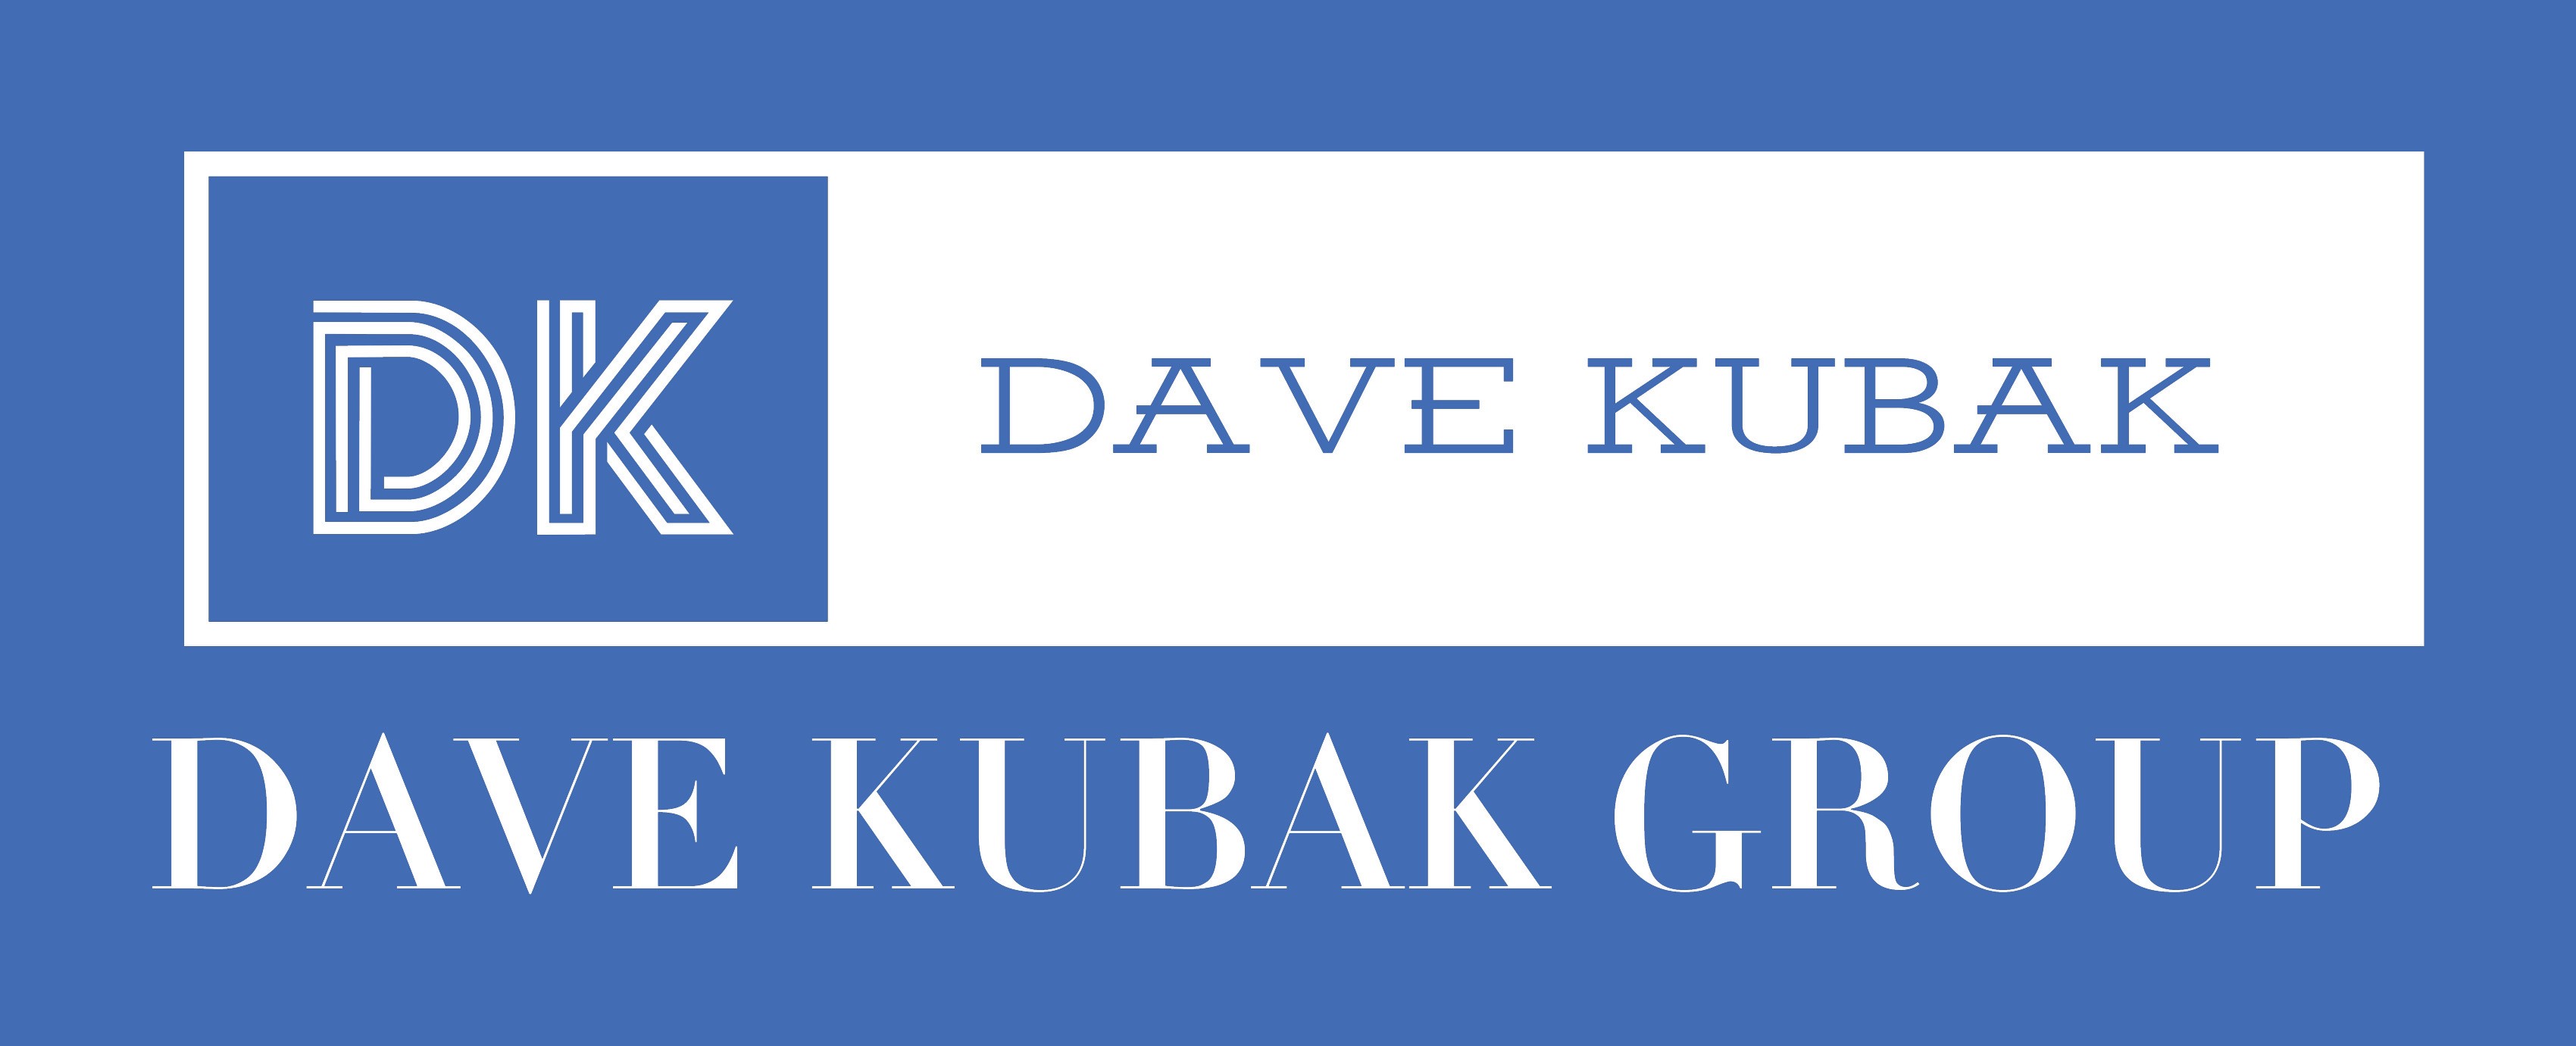 Dave Kubak Group